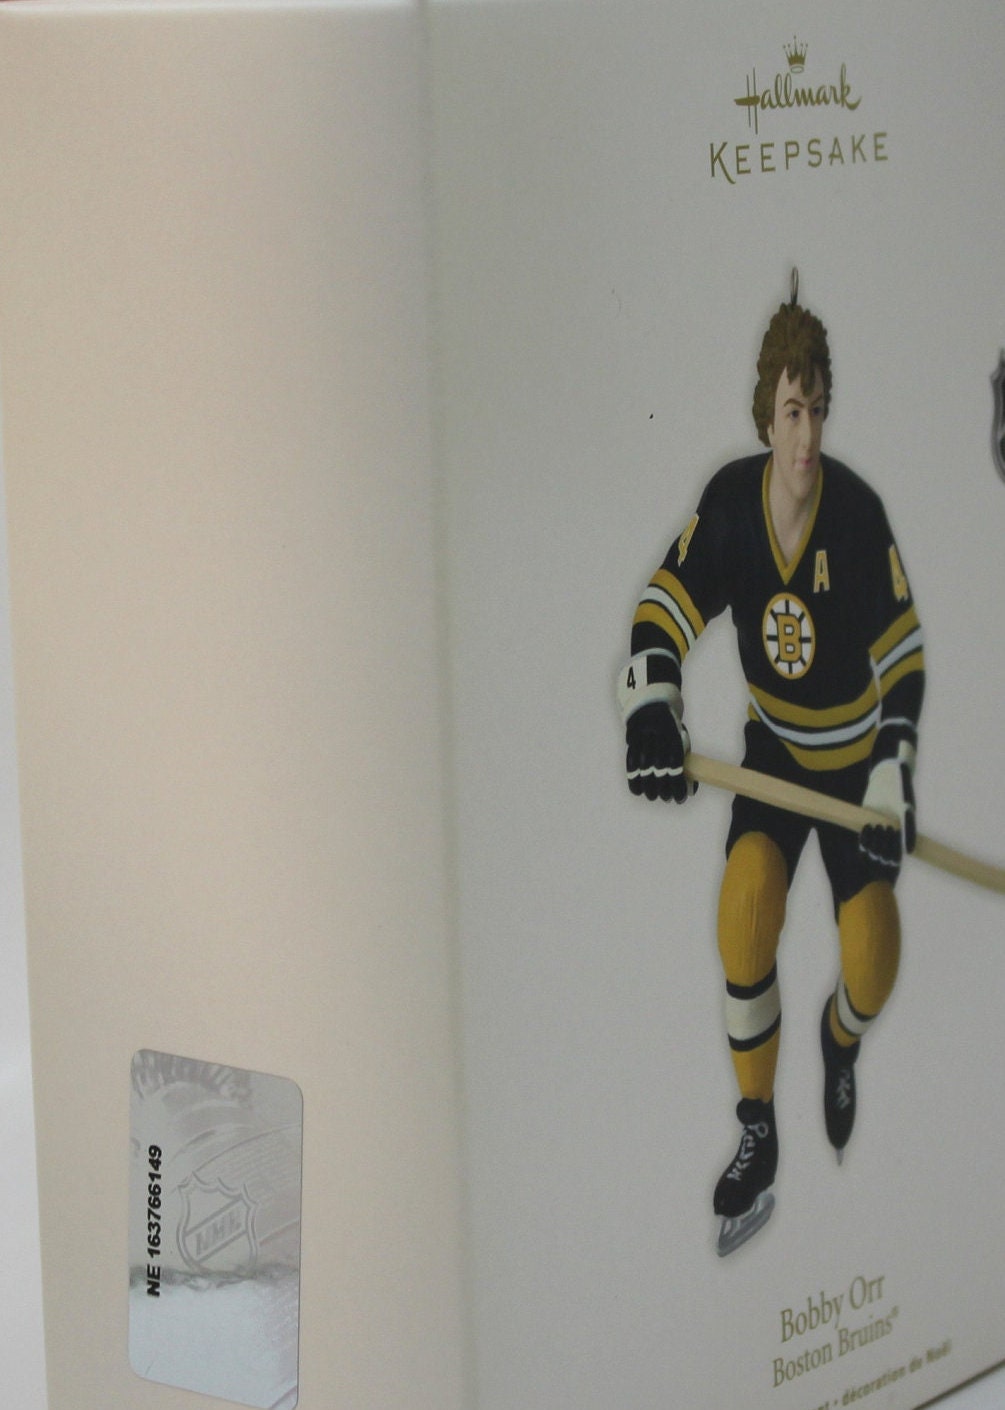 Bobby Orr - Boston Bruins 2013 Hallmark Ornament